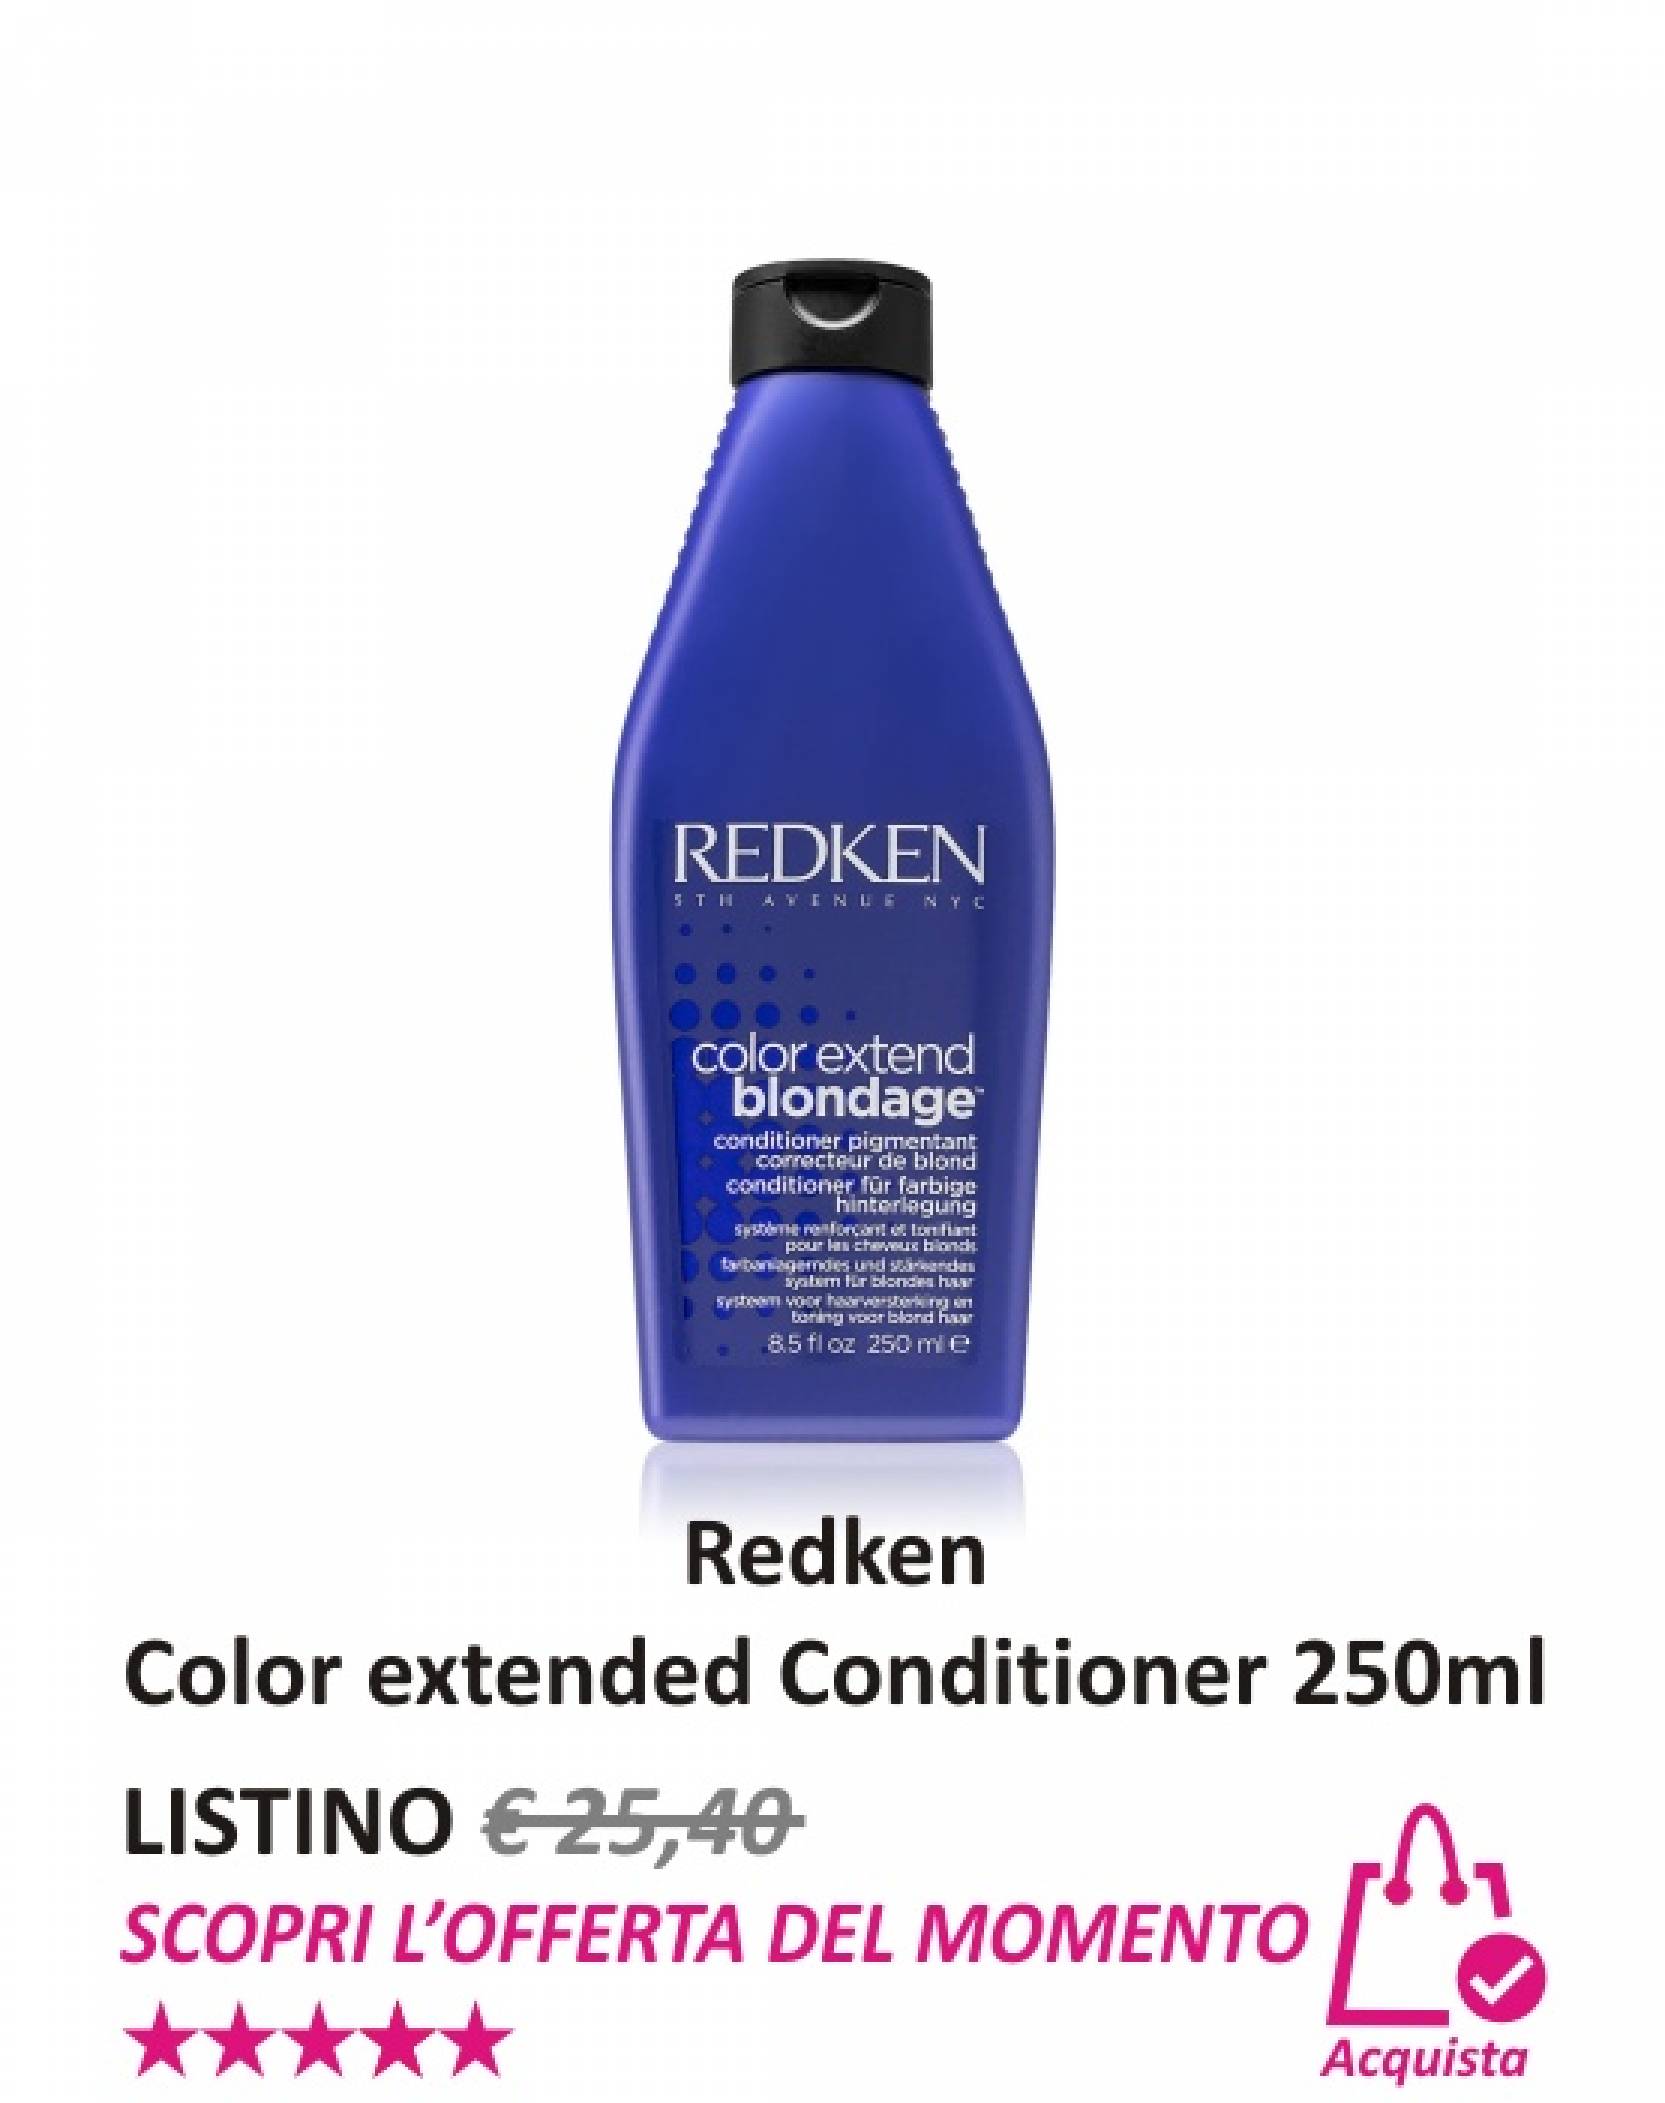 Redken Color extended Blondage Conditioner 250 ml